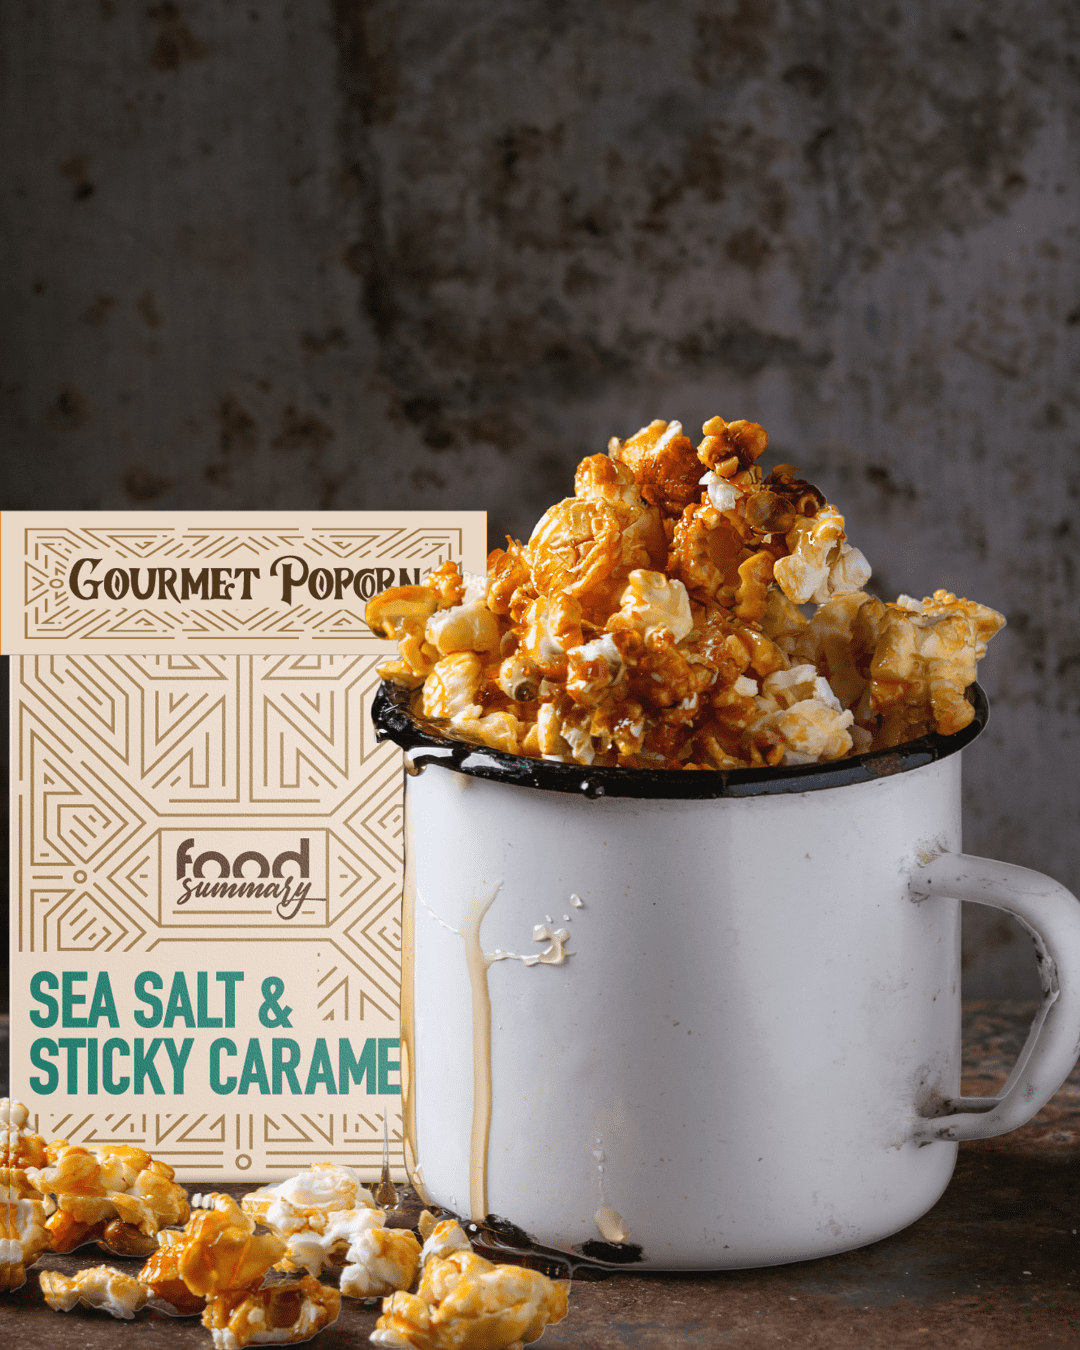 Food Summary Sea salt & Sticky Caramel Gourmet Popcorn